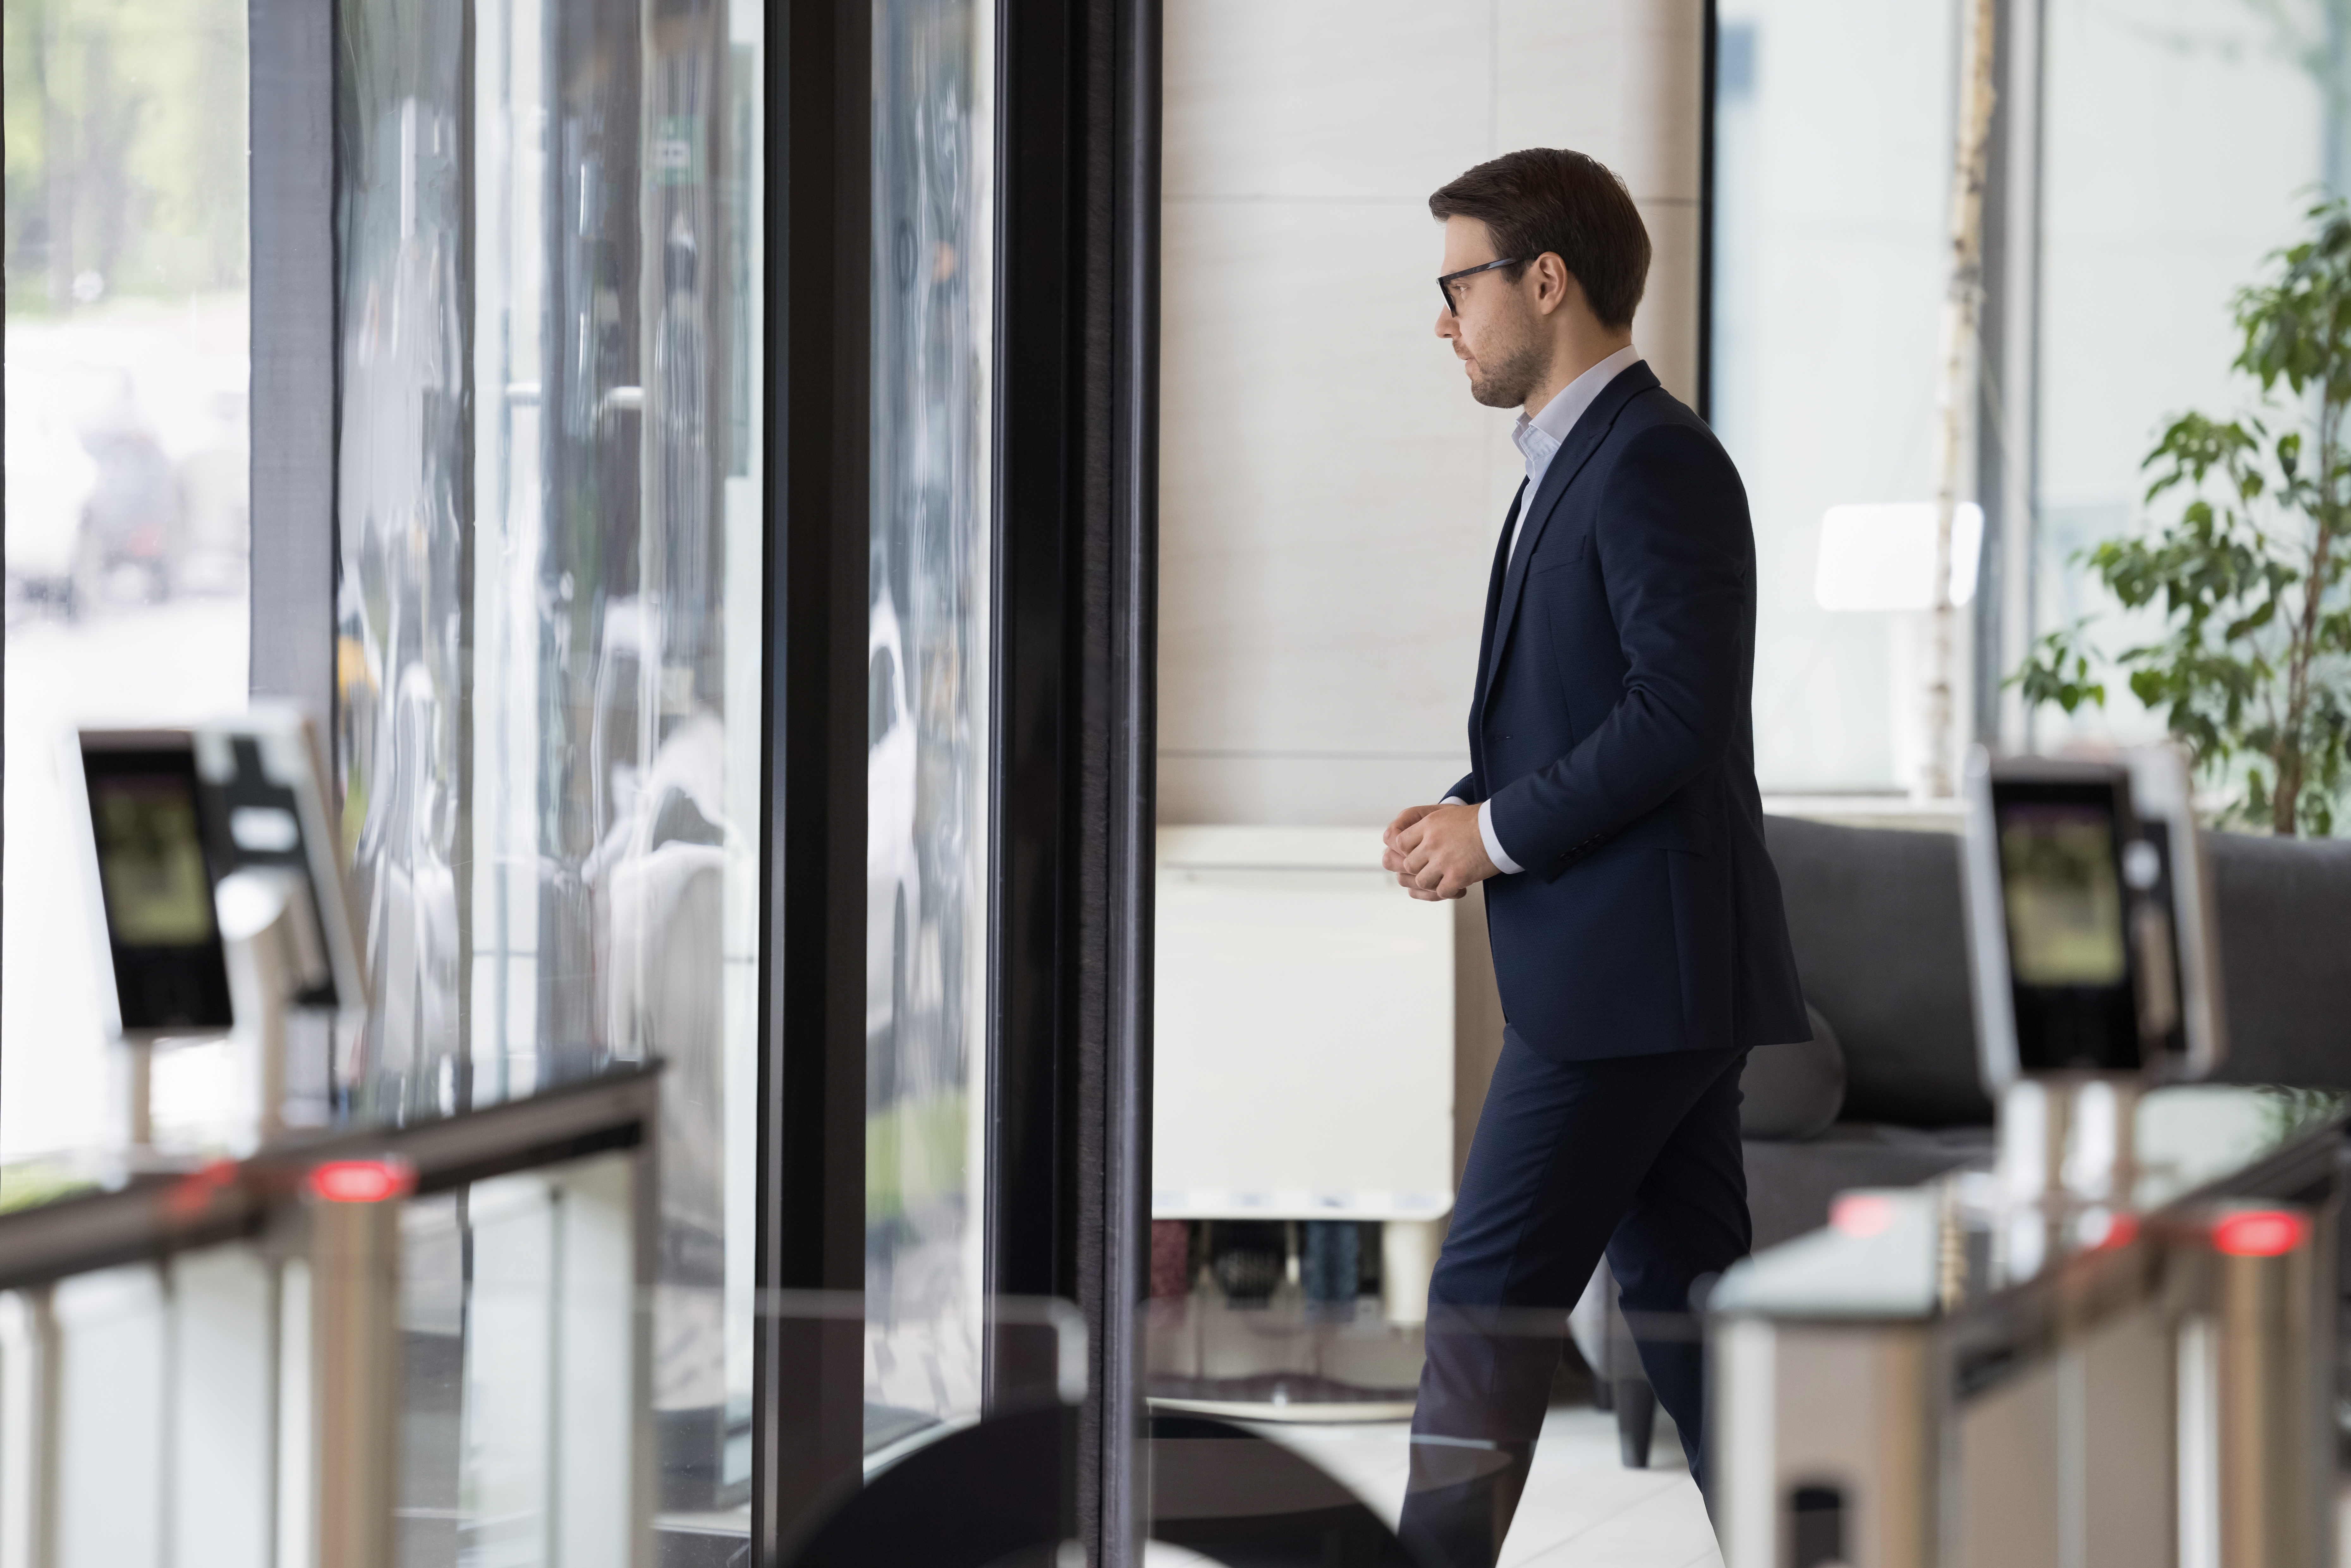 A man leaving an office building | Source: Shutterstock